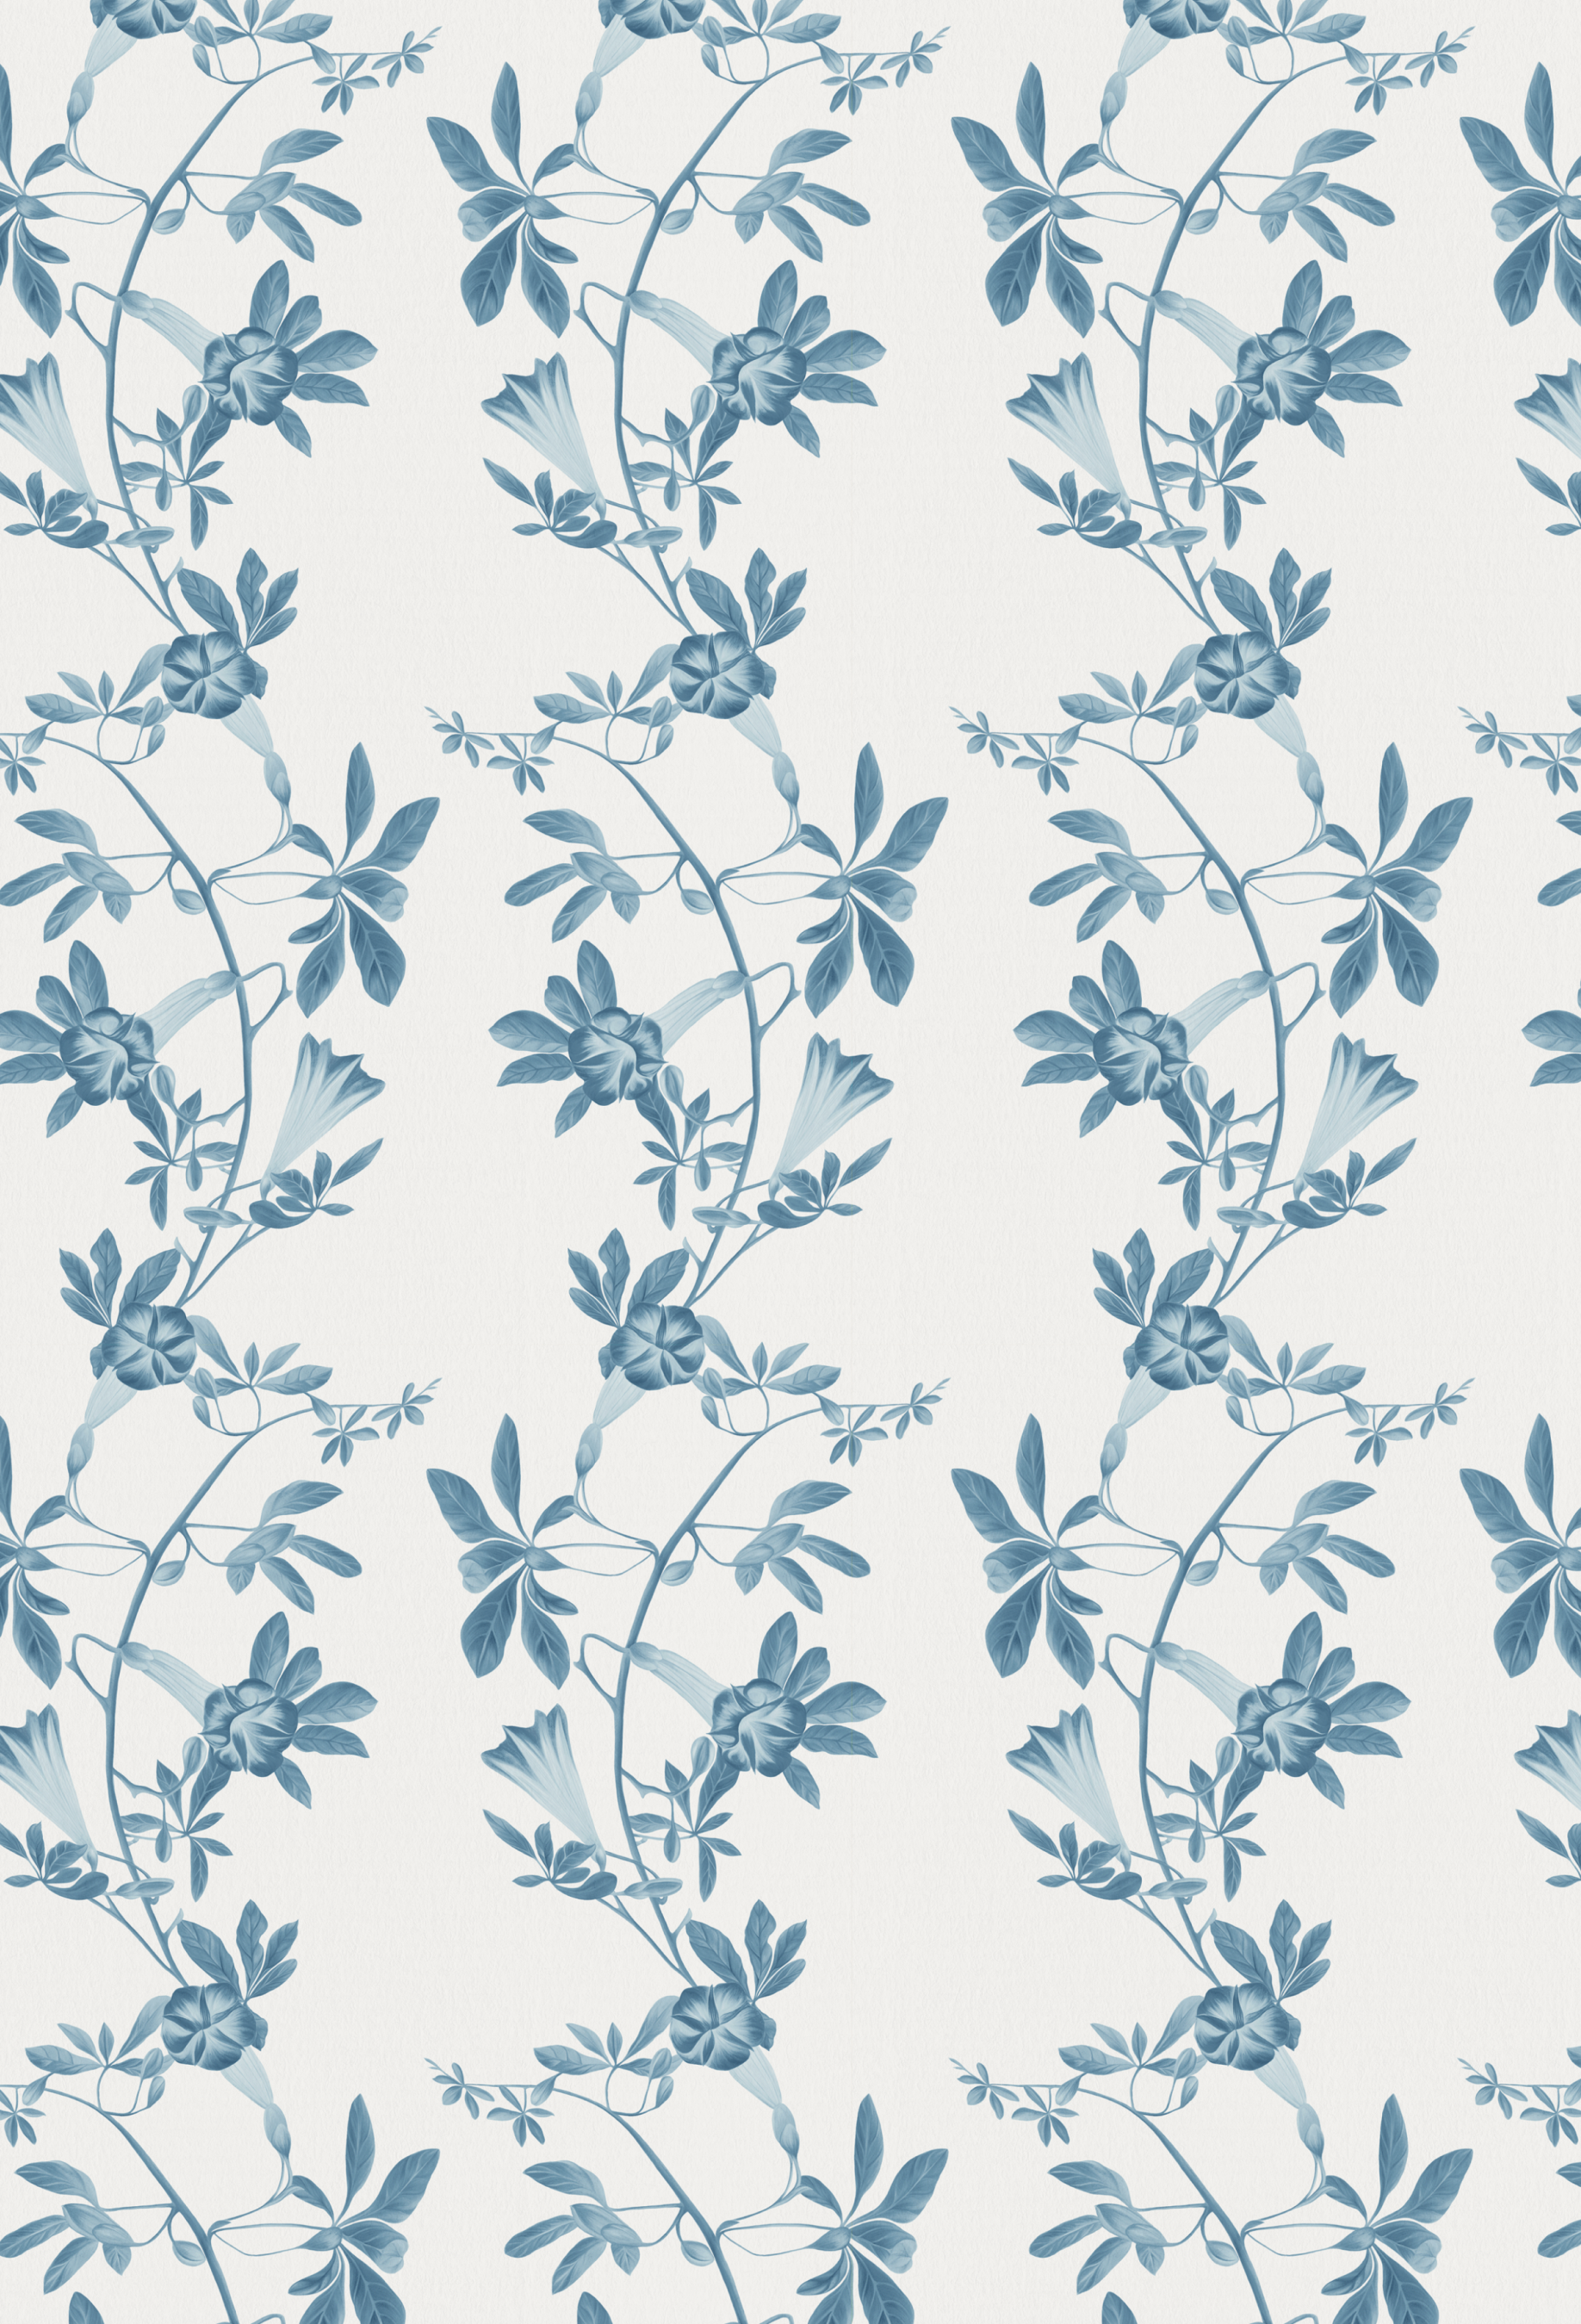 Toile inspired blue floral vines featuring the Midsummer in Iris luxury wallpaper by Deus ex Gardenia.